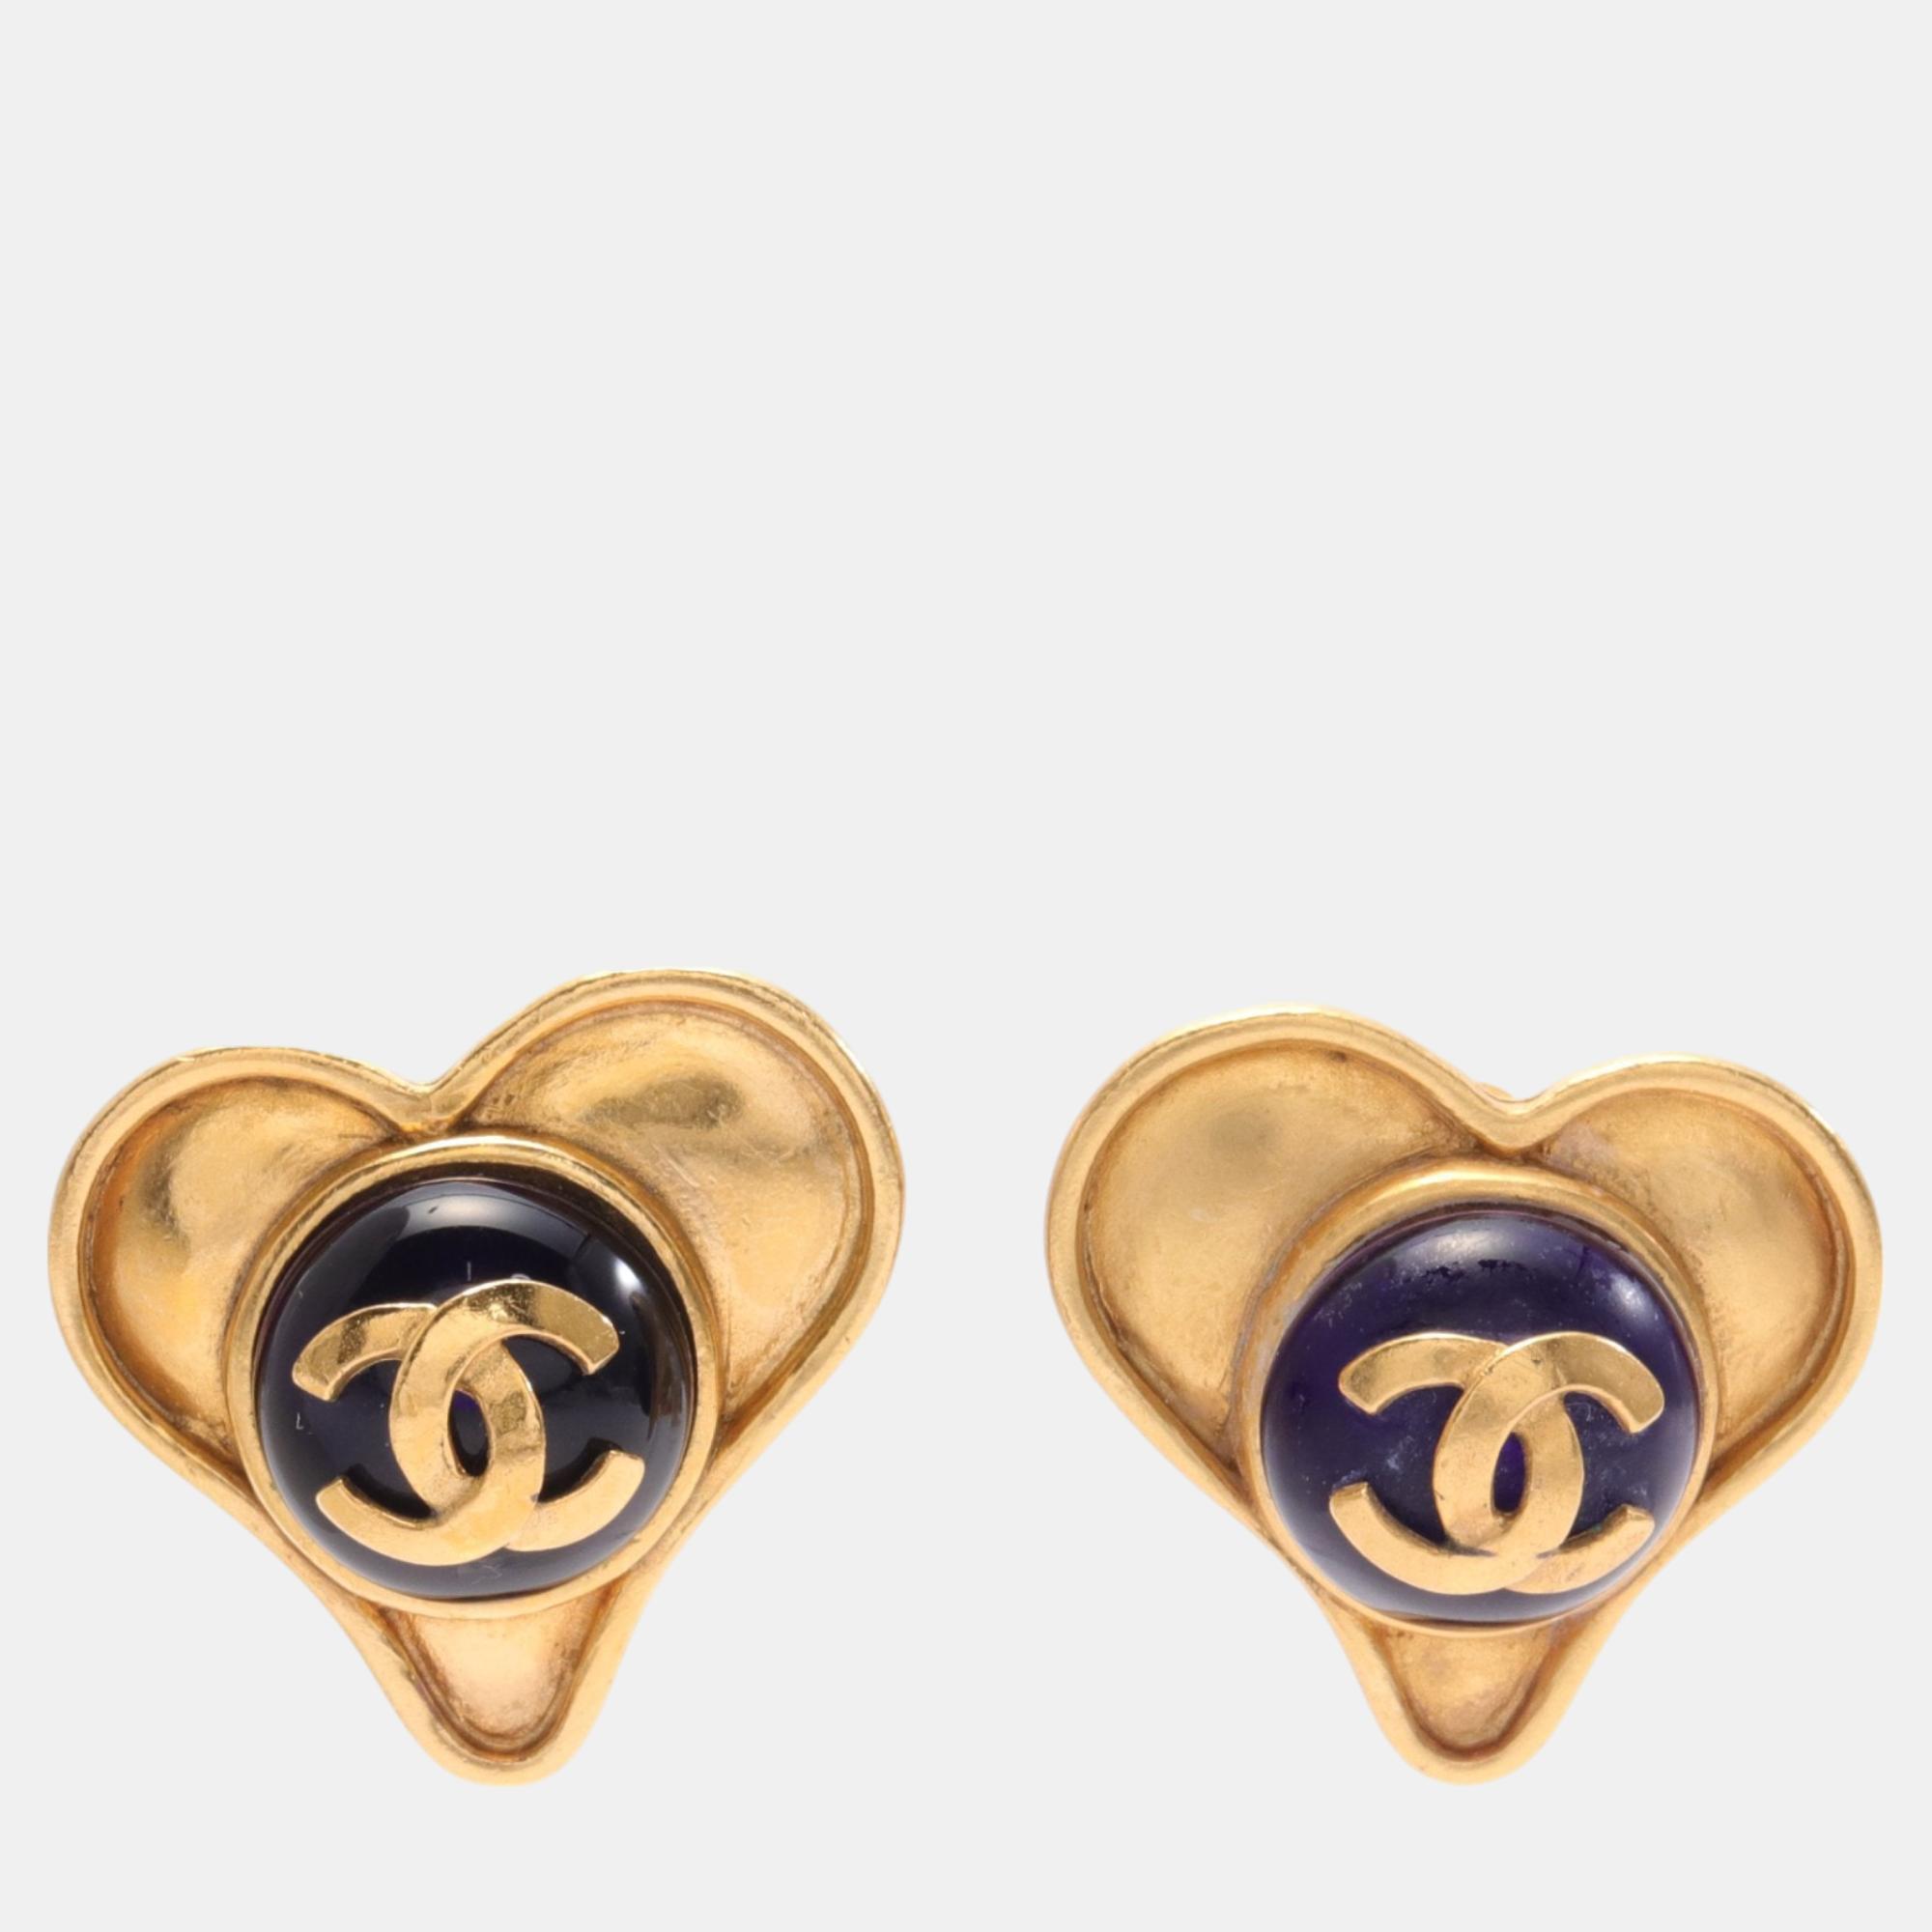 Chanel coco mark earrings gp gripore gold dark blue 95p